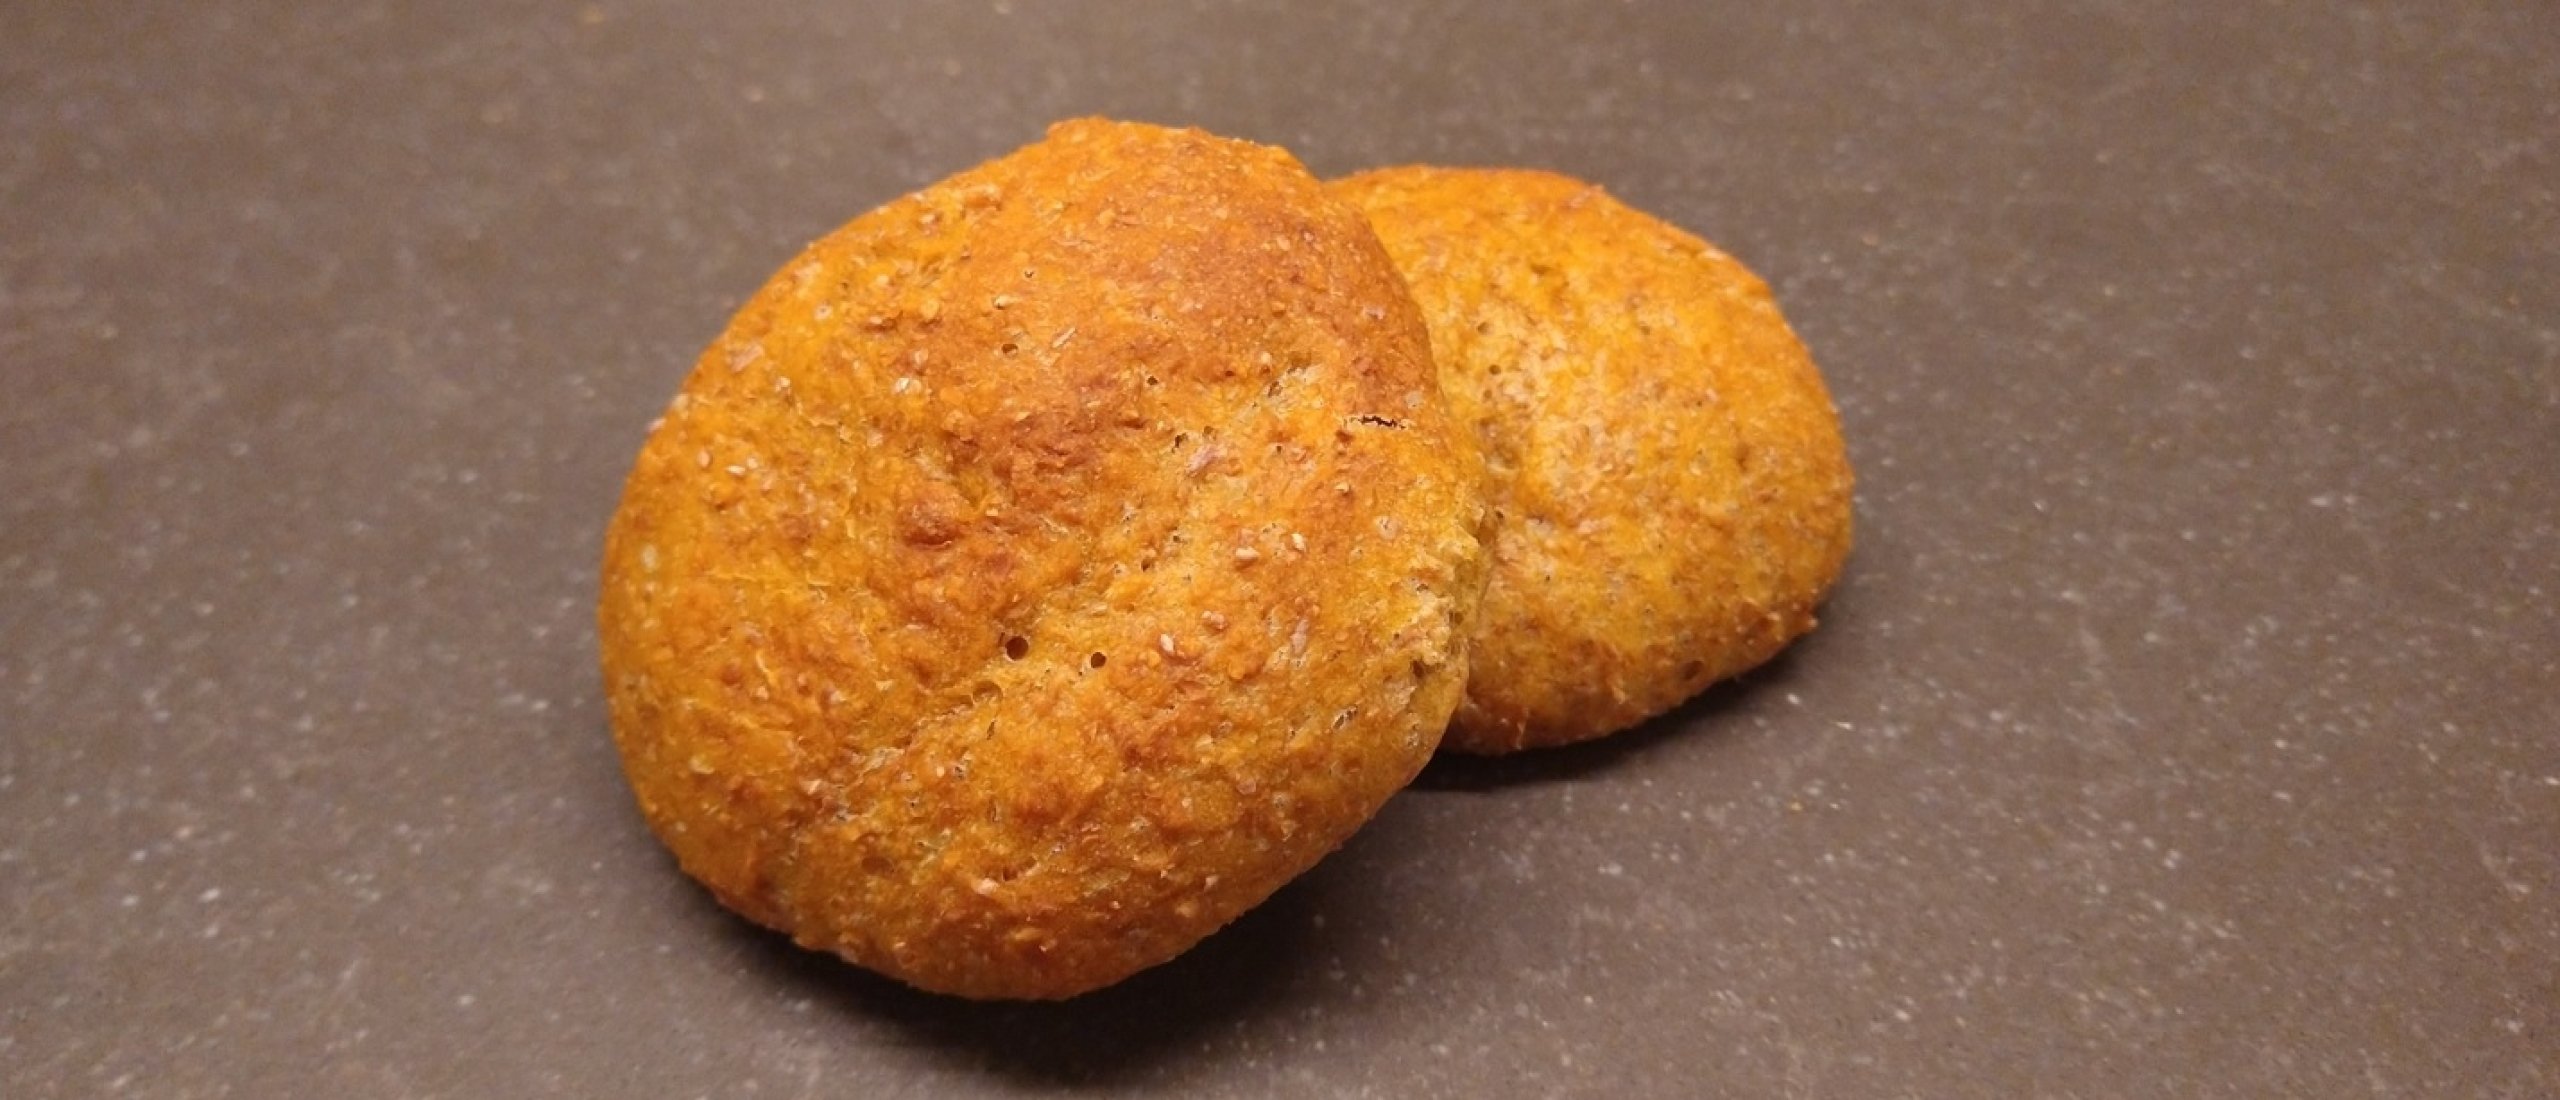 volkoren pompoenbroodjes gezond caloriearm brood recept